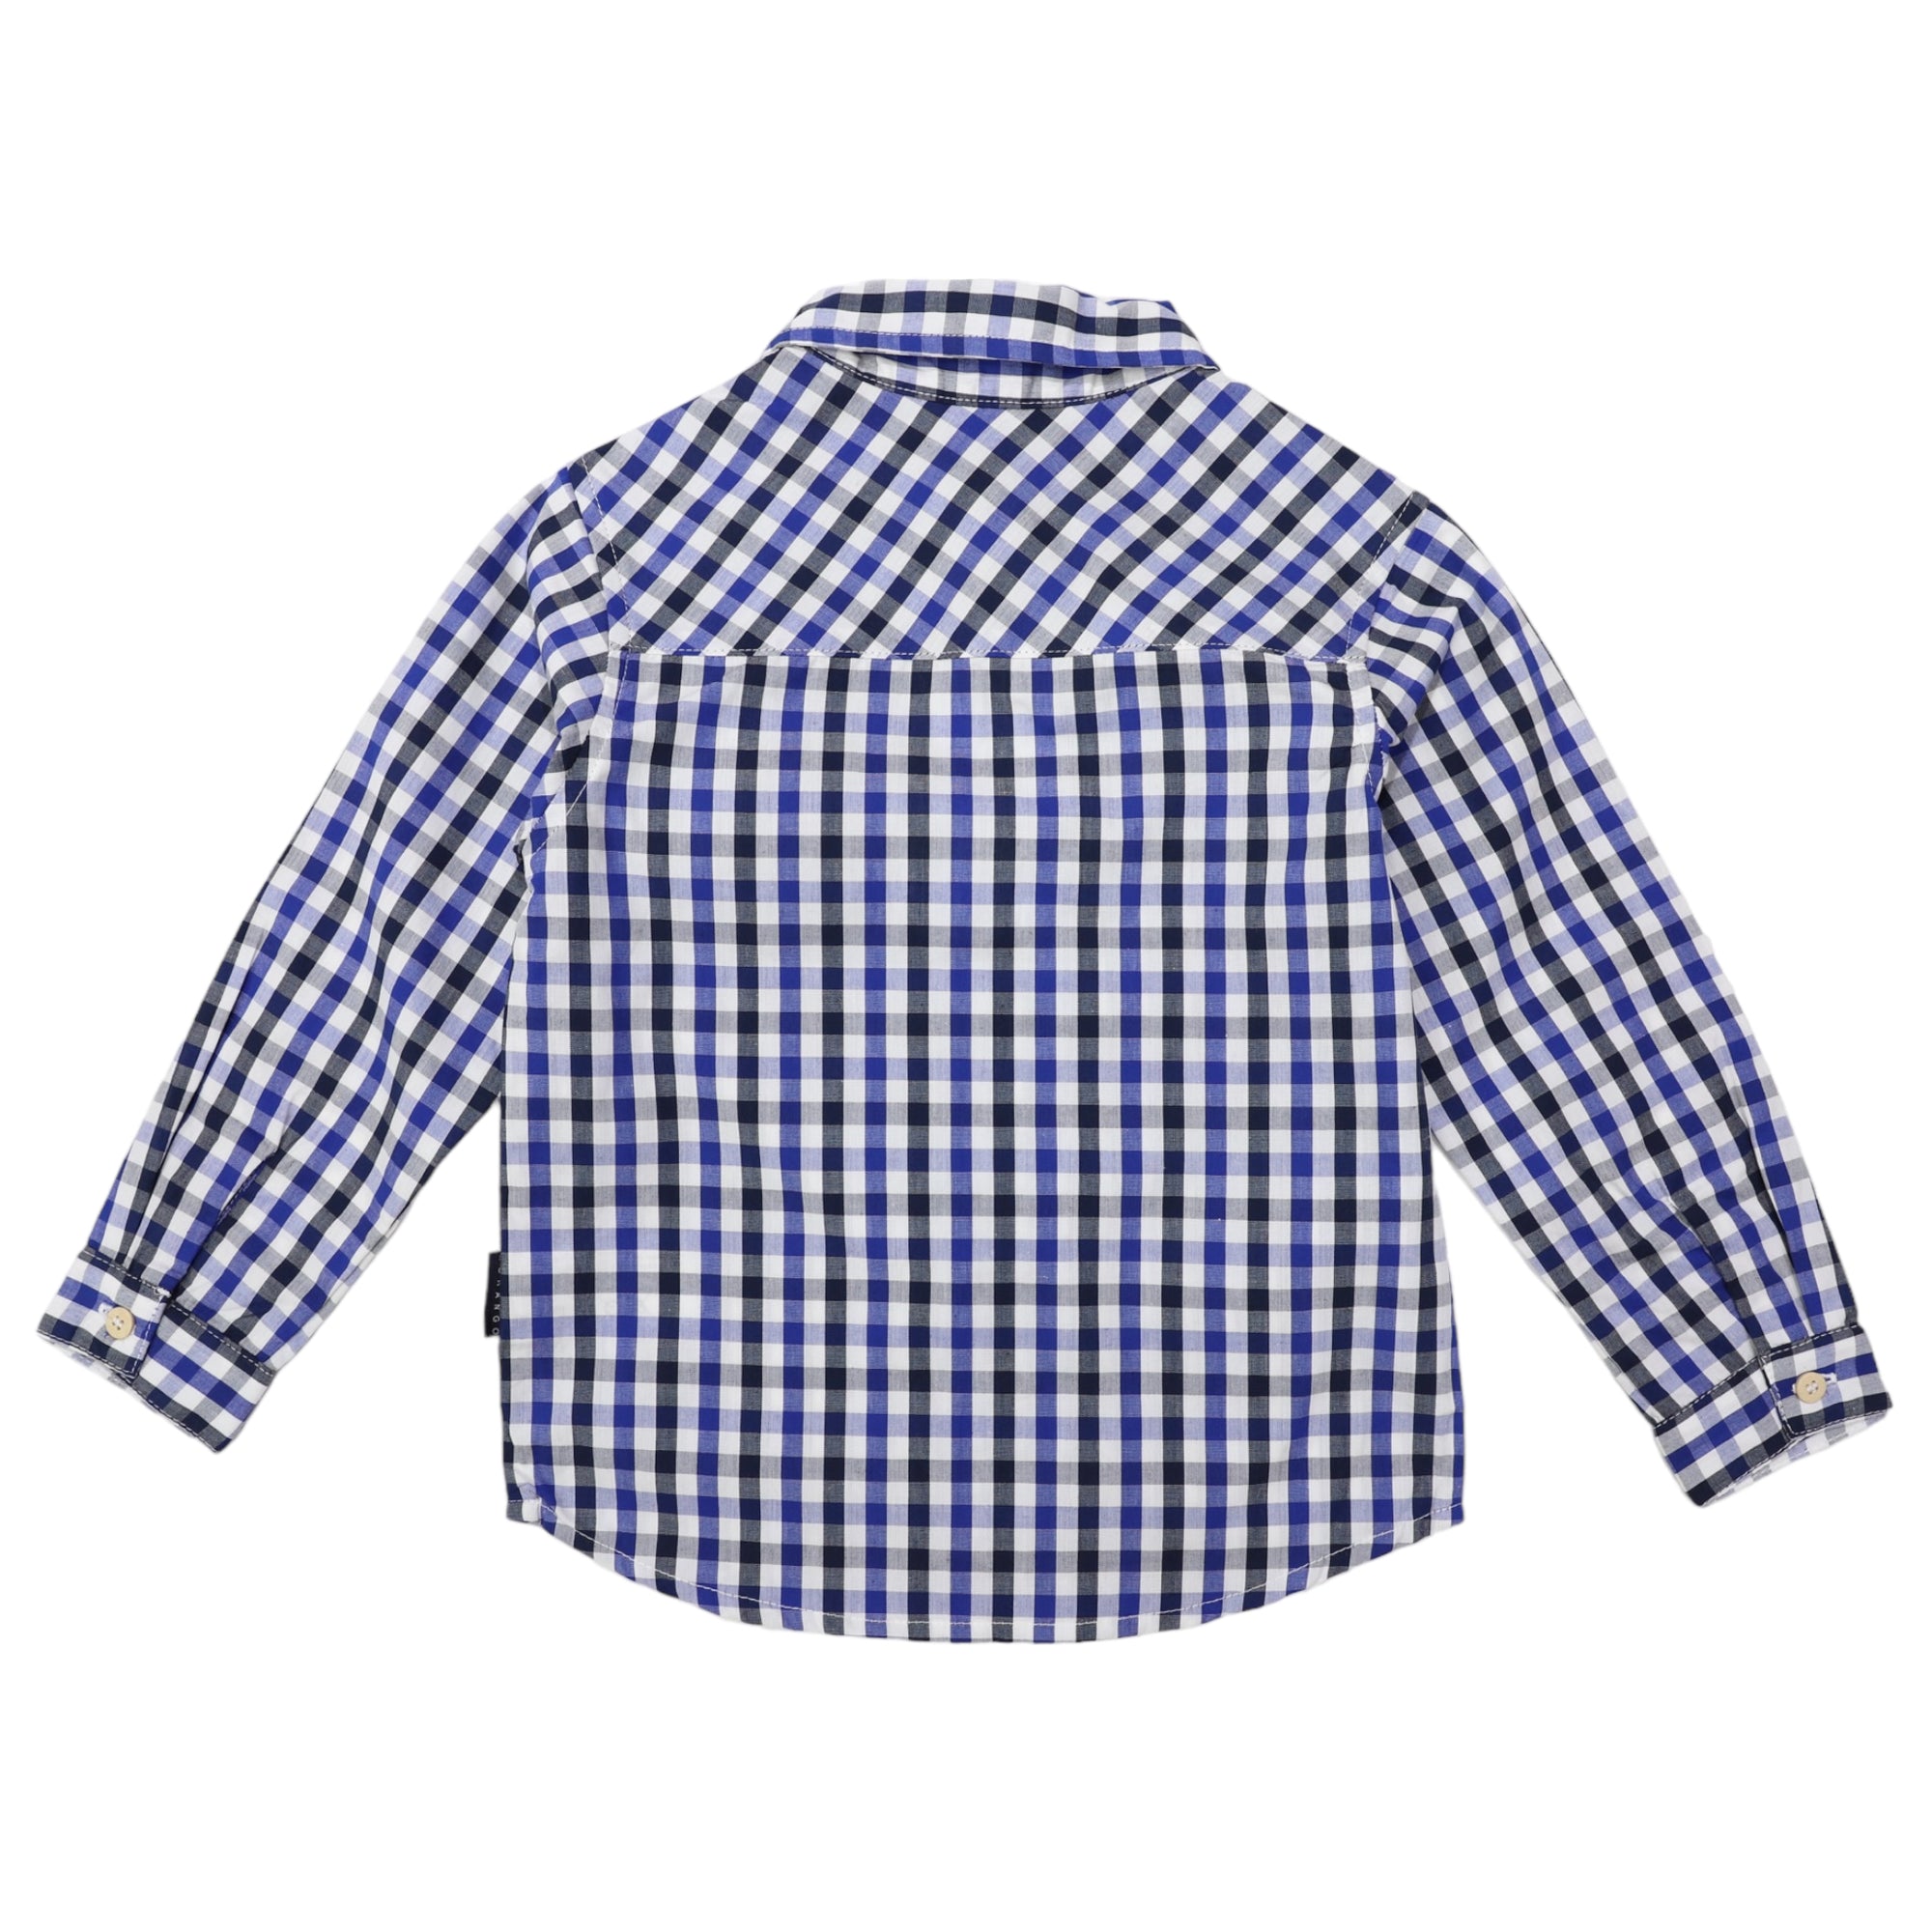 Korango Long Sleeve Shirt Check Design - Blue